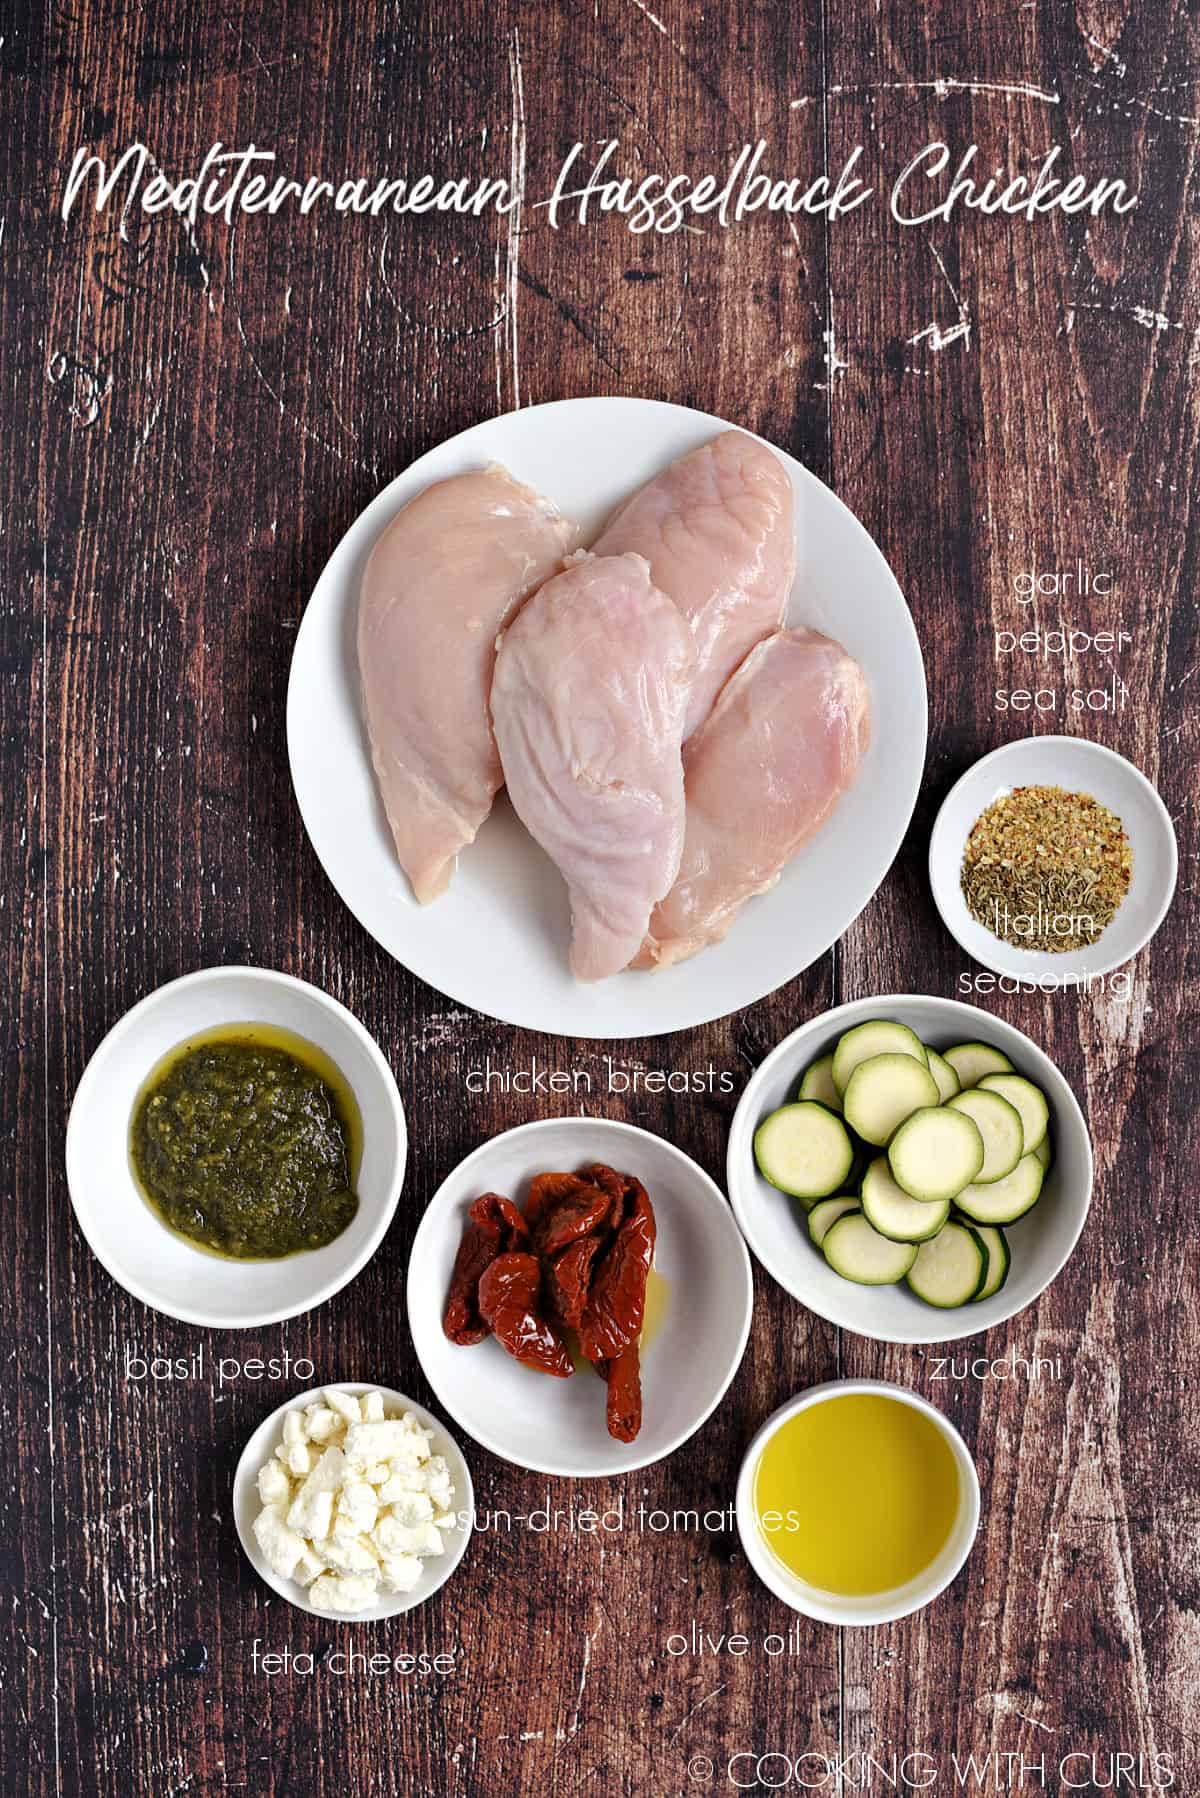 Chicken breasts, basil pesto, sun-dried tomatoes, zucchini rounds, feta cheese, olive oil, Italian seasoning and garlic-pepper sea salt in white bowls.